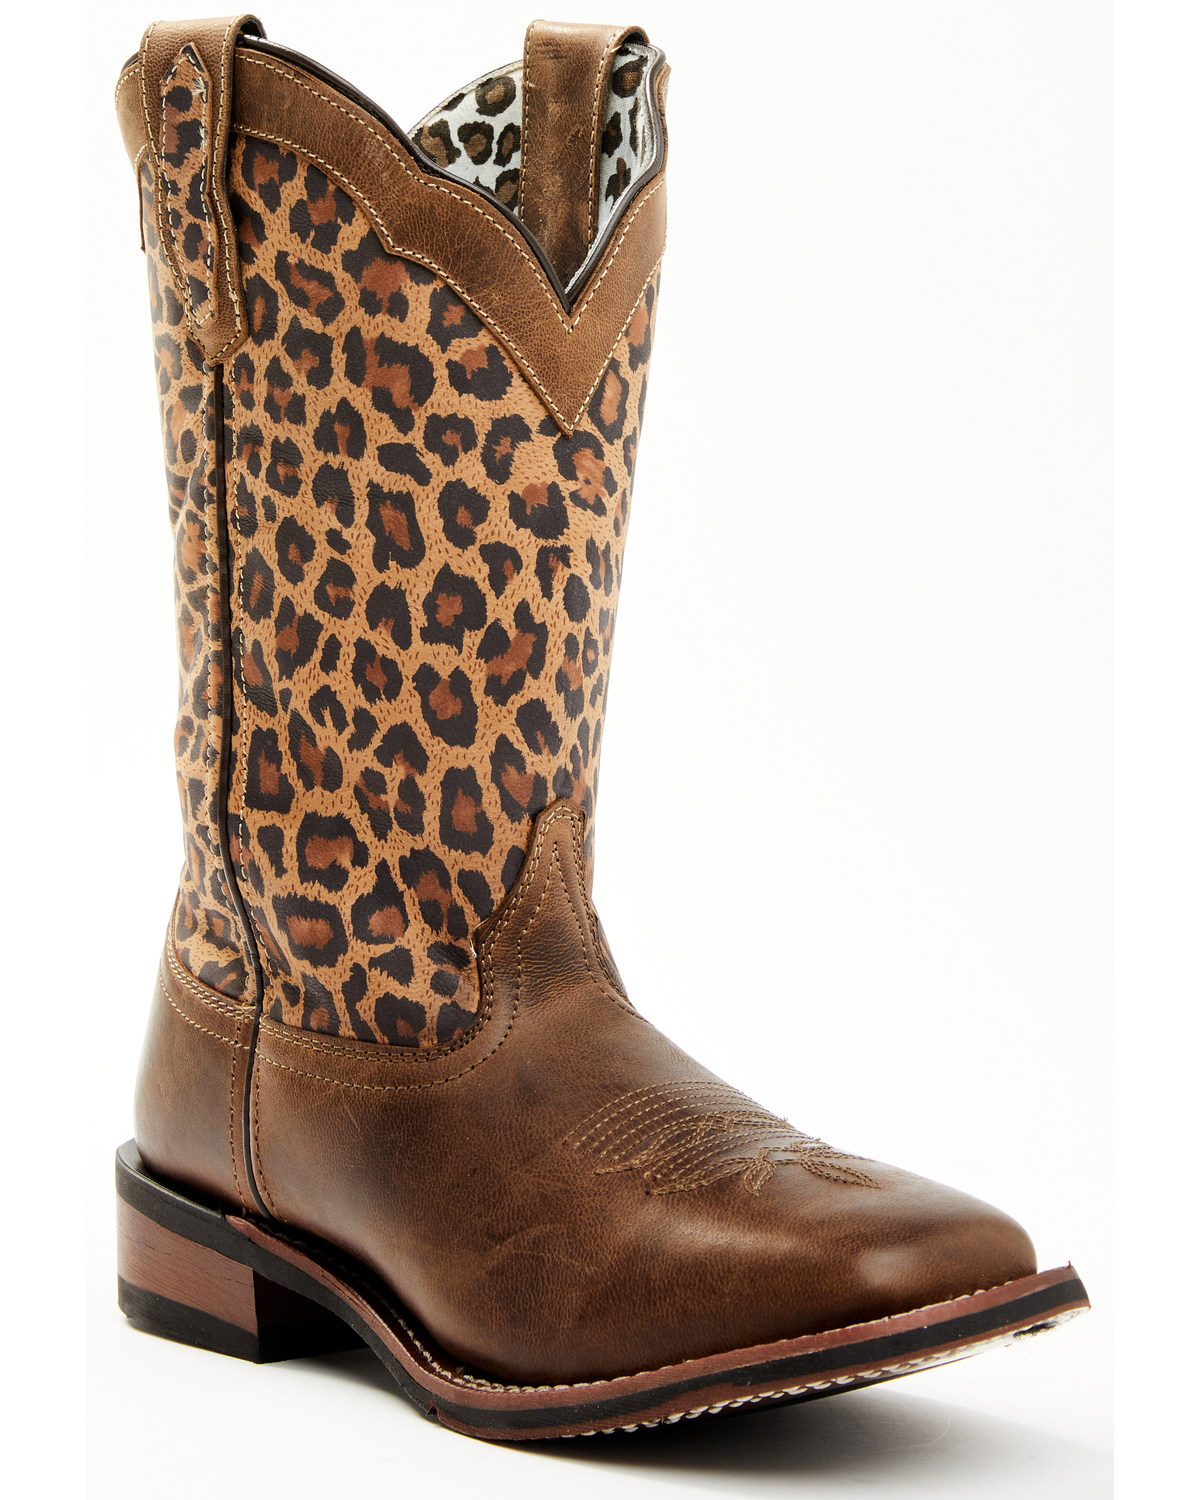 Laredo Women's Leopard Print Western Performance Boots - Broad Square Toe